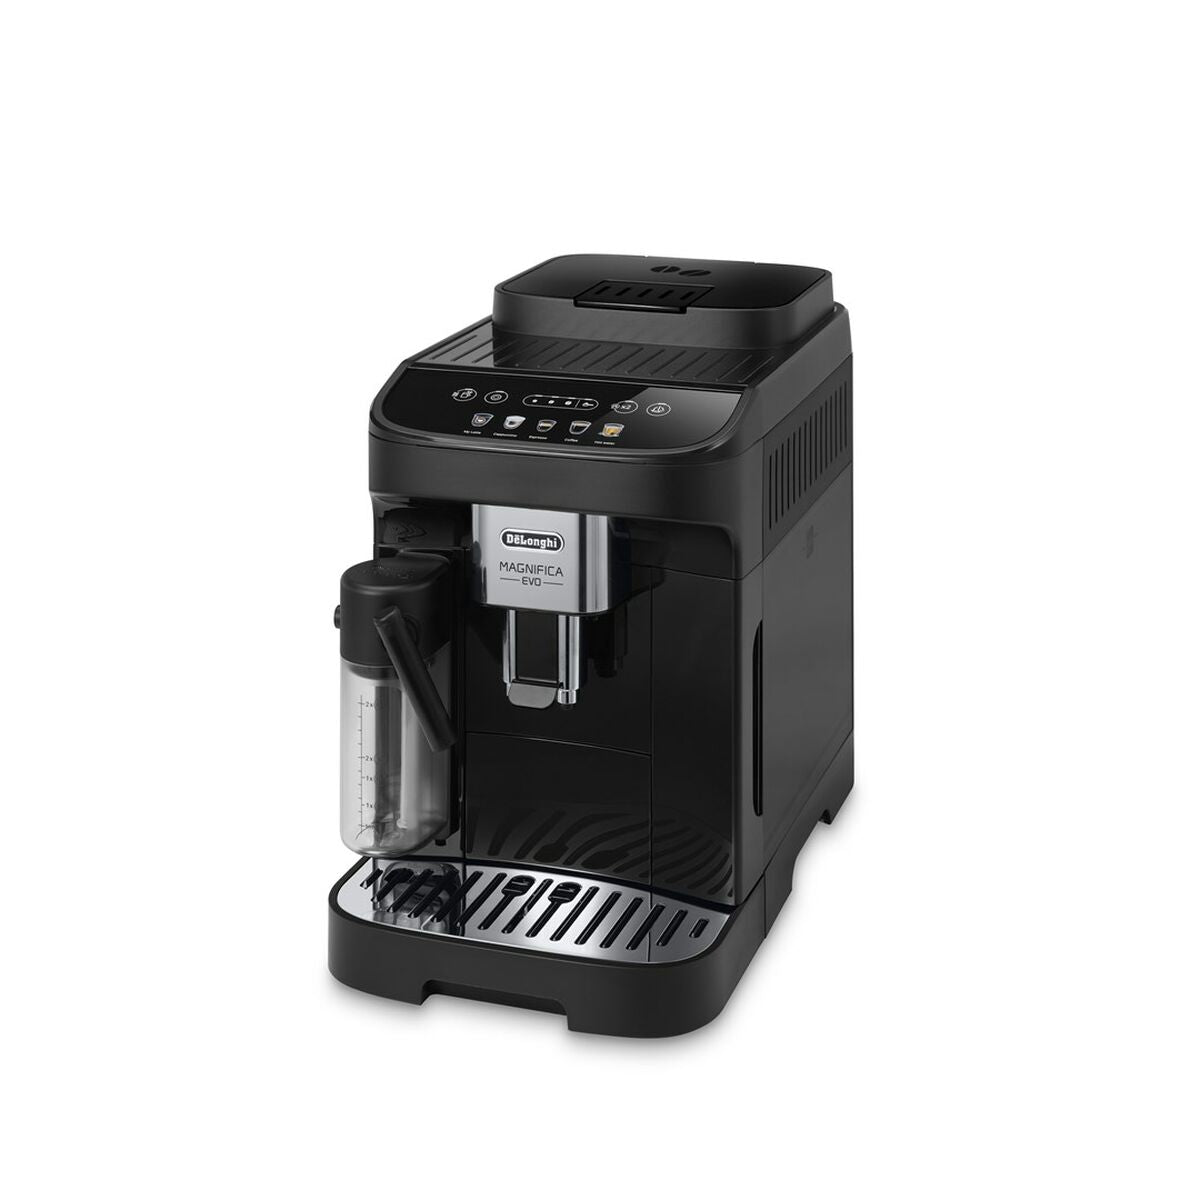 Superautomatische Kaffeemaschine DeLonghi ECAM 290.61.B 1,4 L Schwarz 1450 W 15 bar 2 Kopper 1,8 L - CA International  